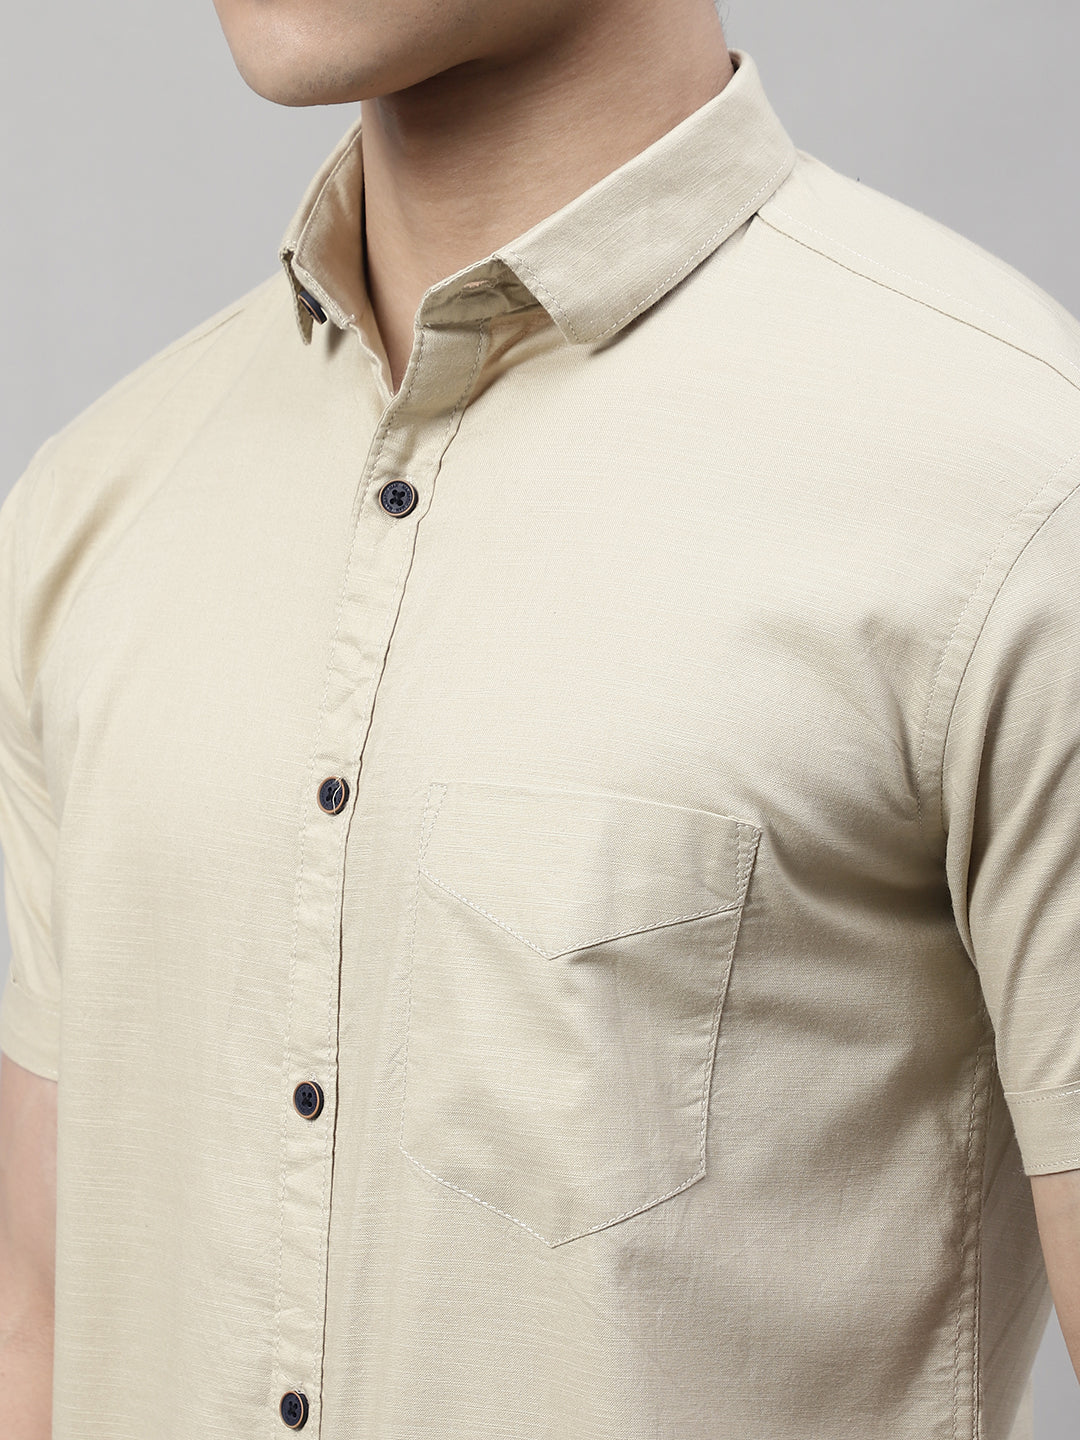 Unique and Fashionable Pure Cotton Half shirt